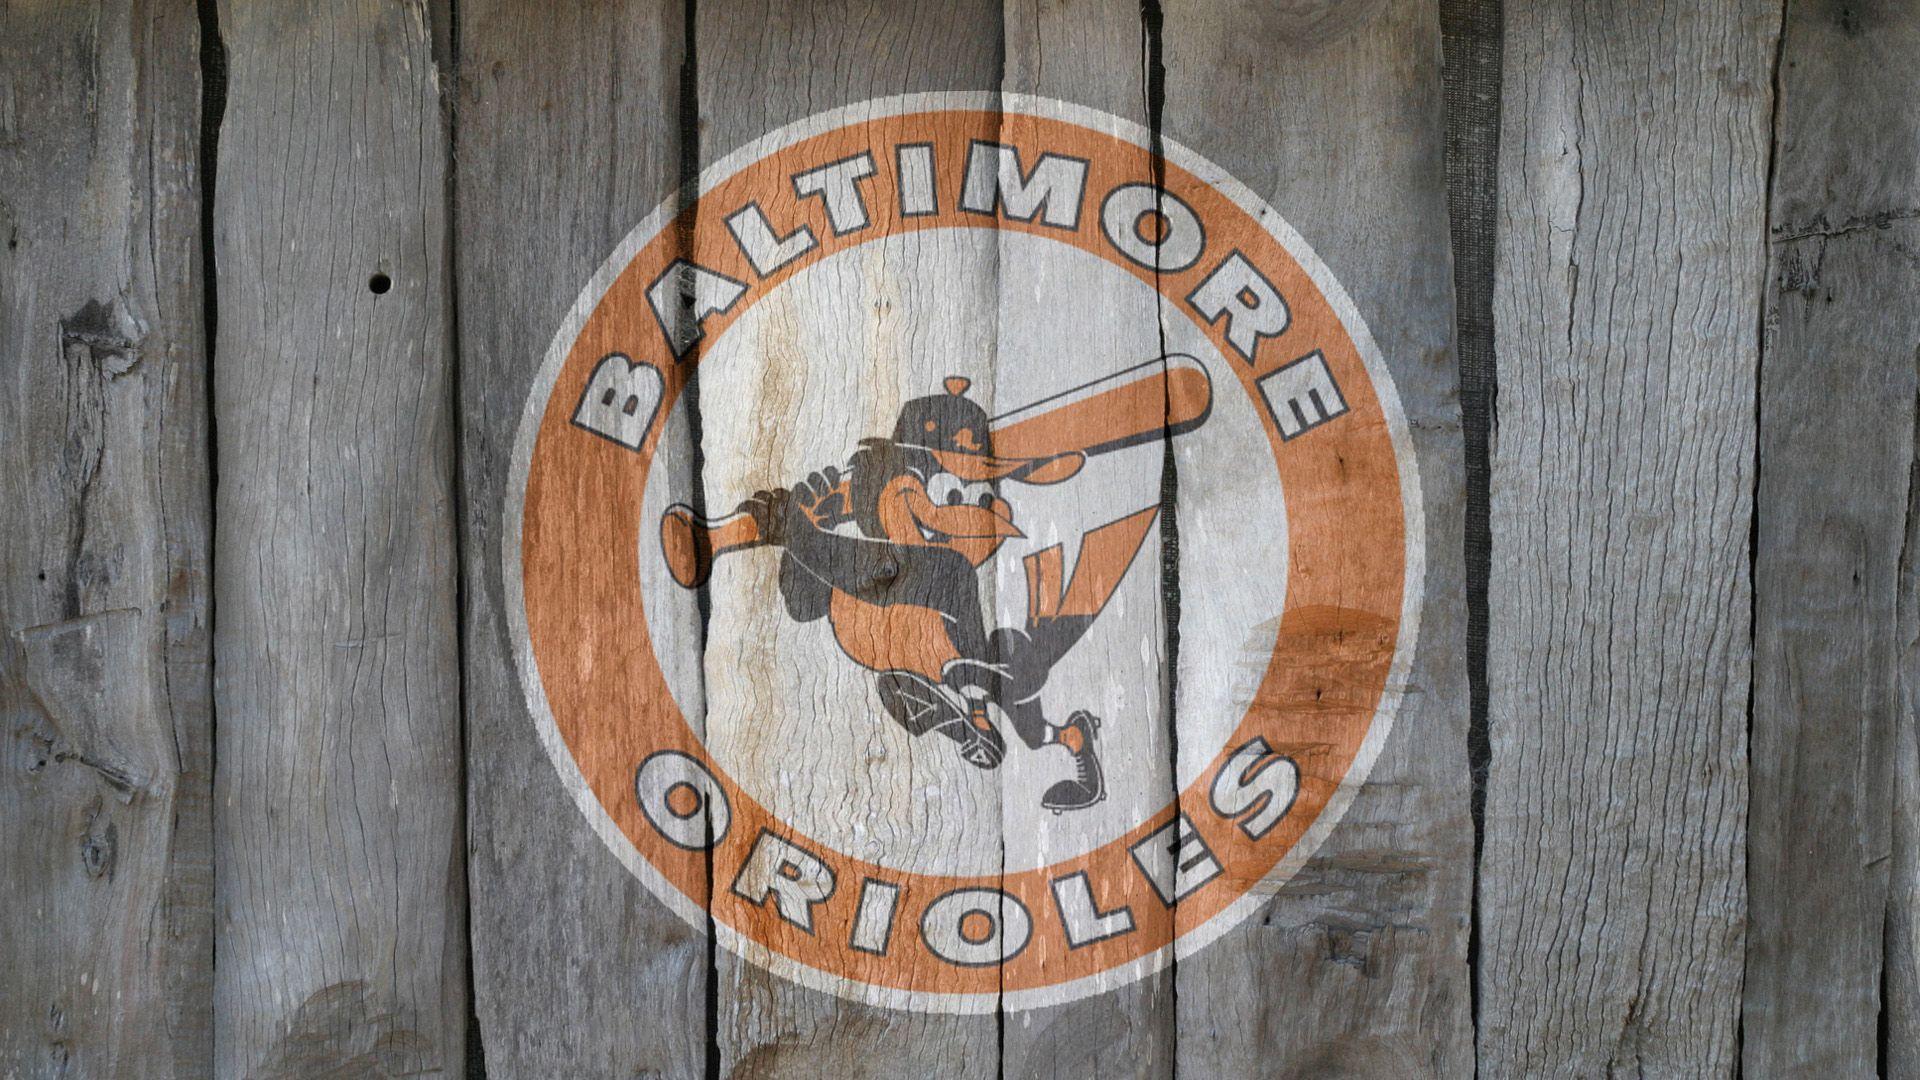 Baltimore Orioles Wallpapers - Wallpaper Cave